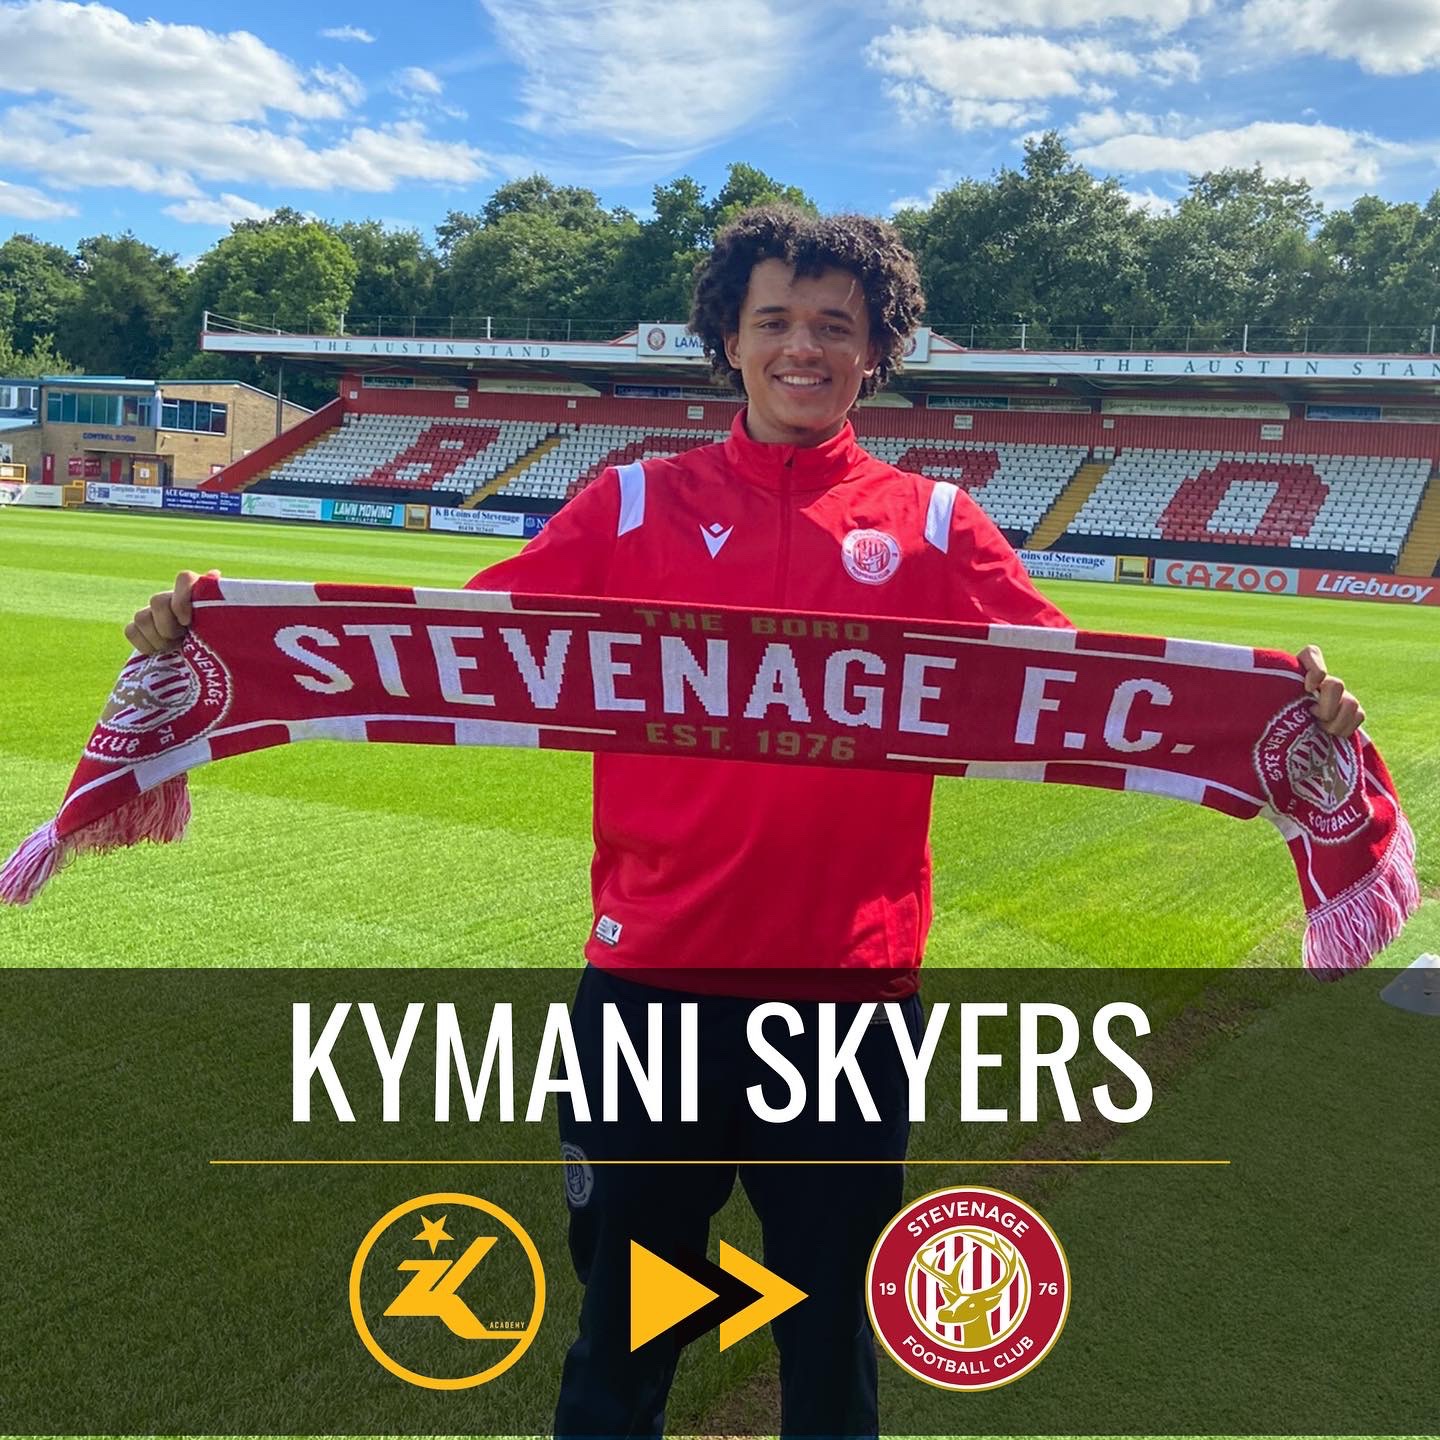 Kymani Skyers signs for Stevenage FC